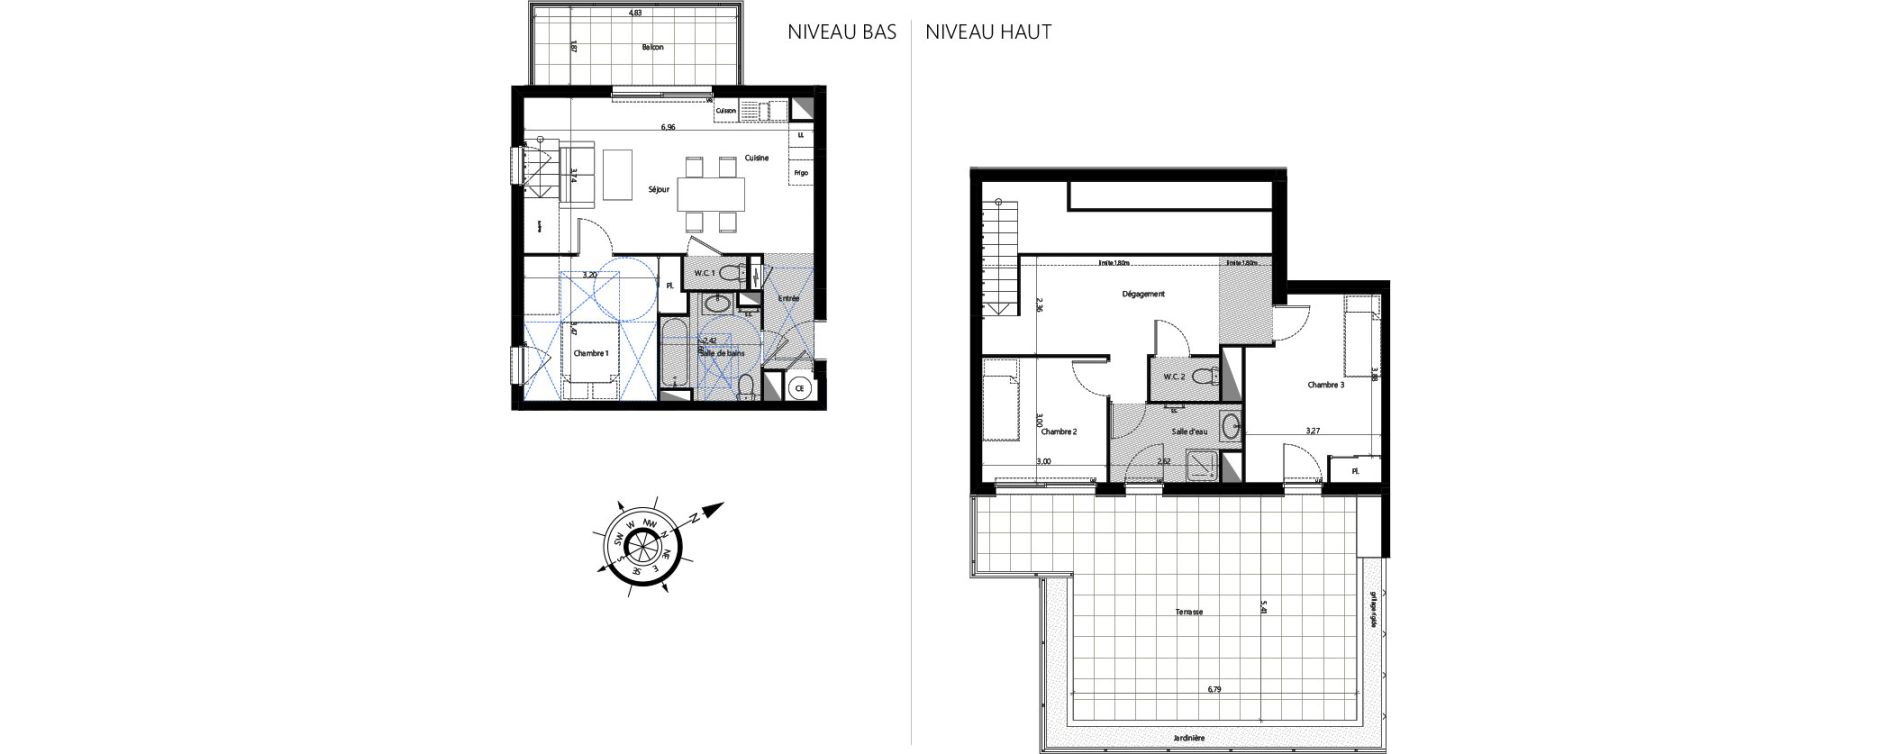 Duplex T4 de 89,30 m2 &agrave; Nice Nice st maurice